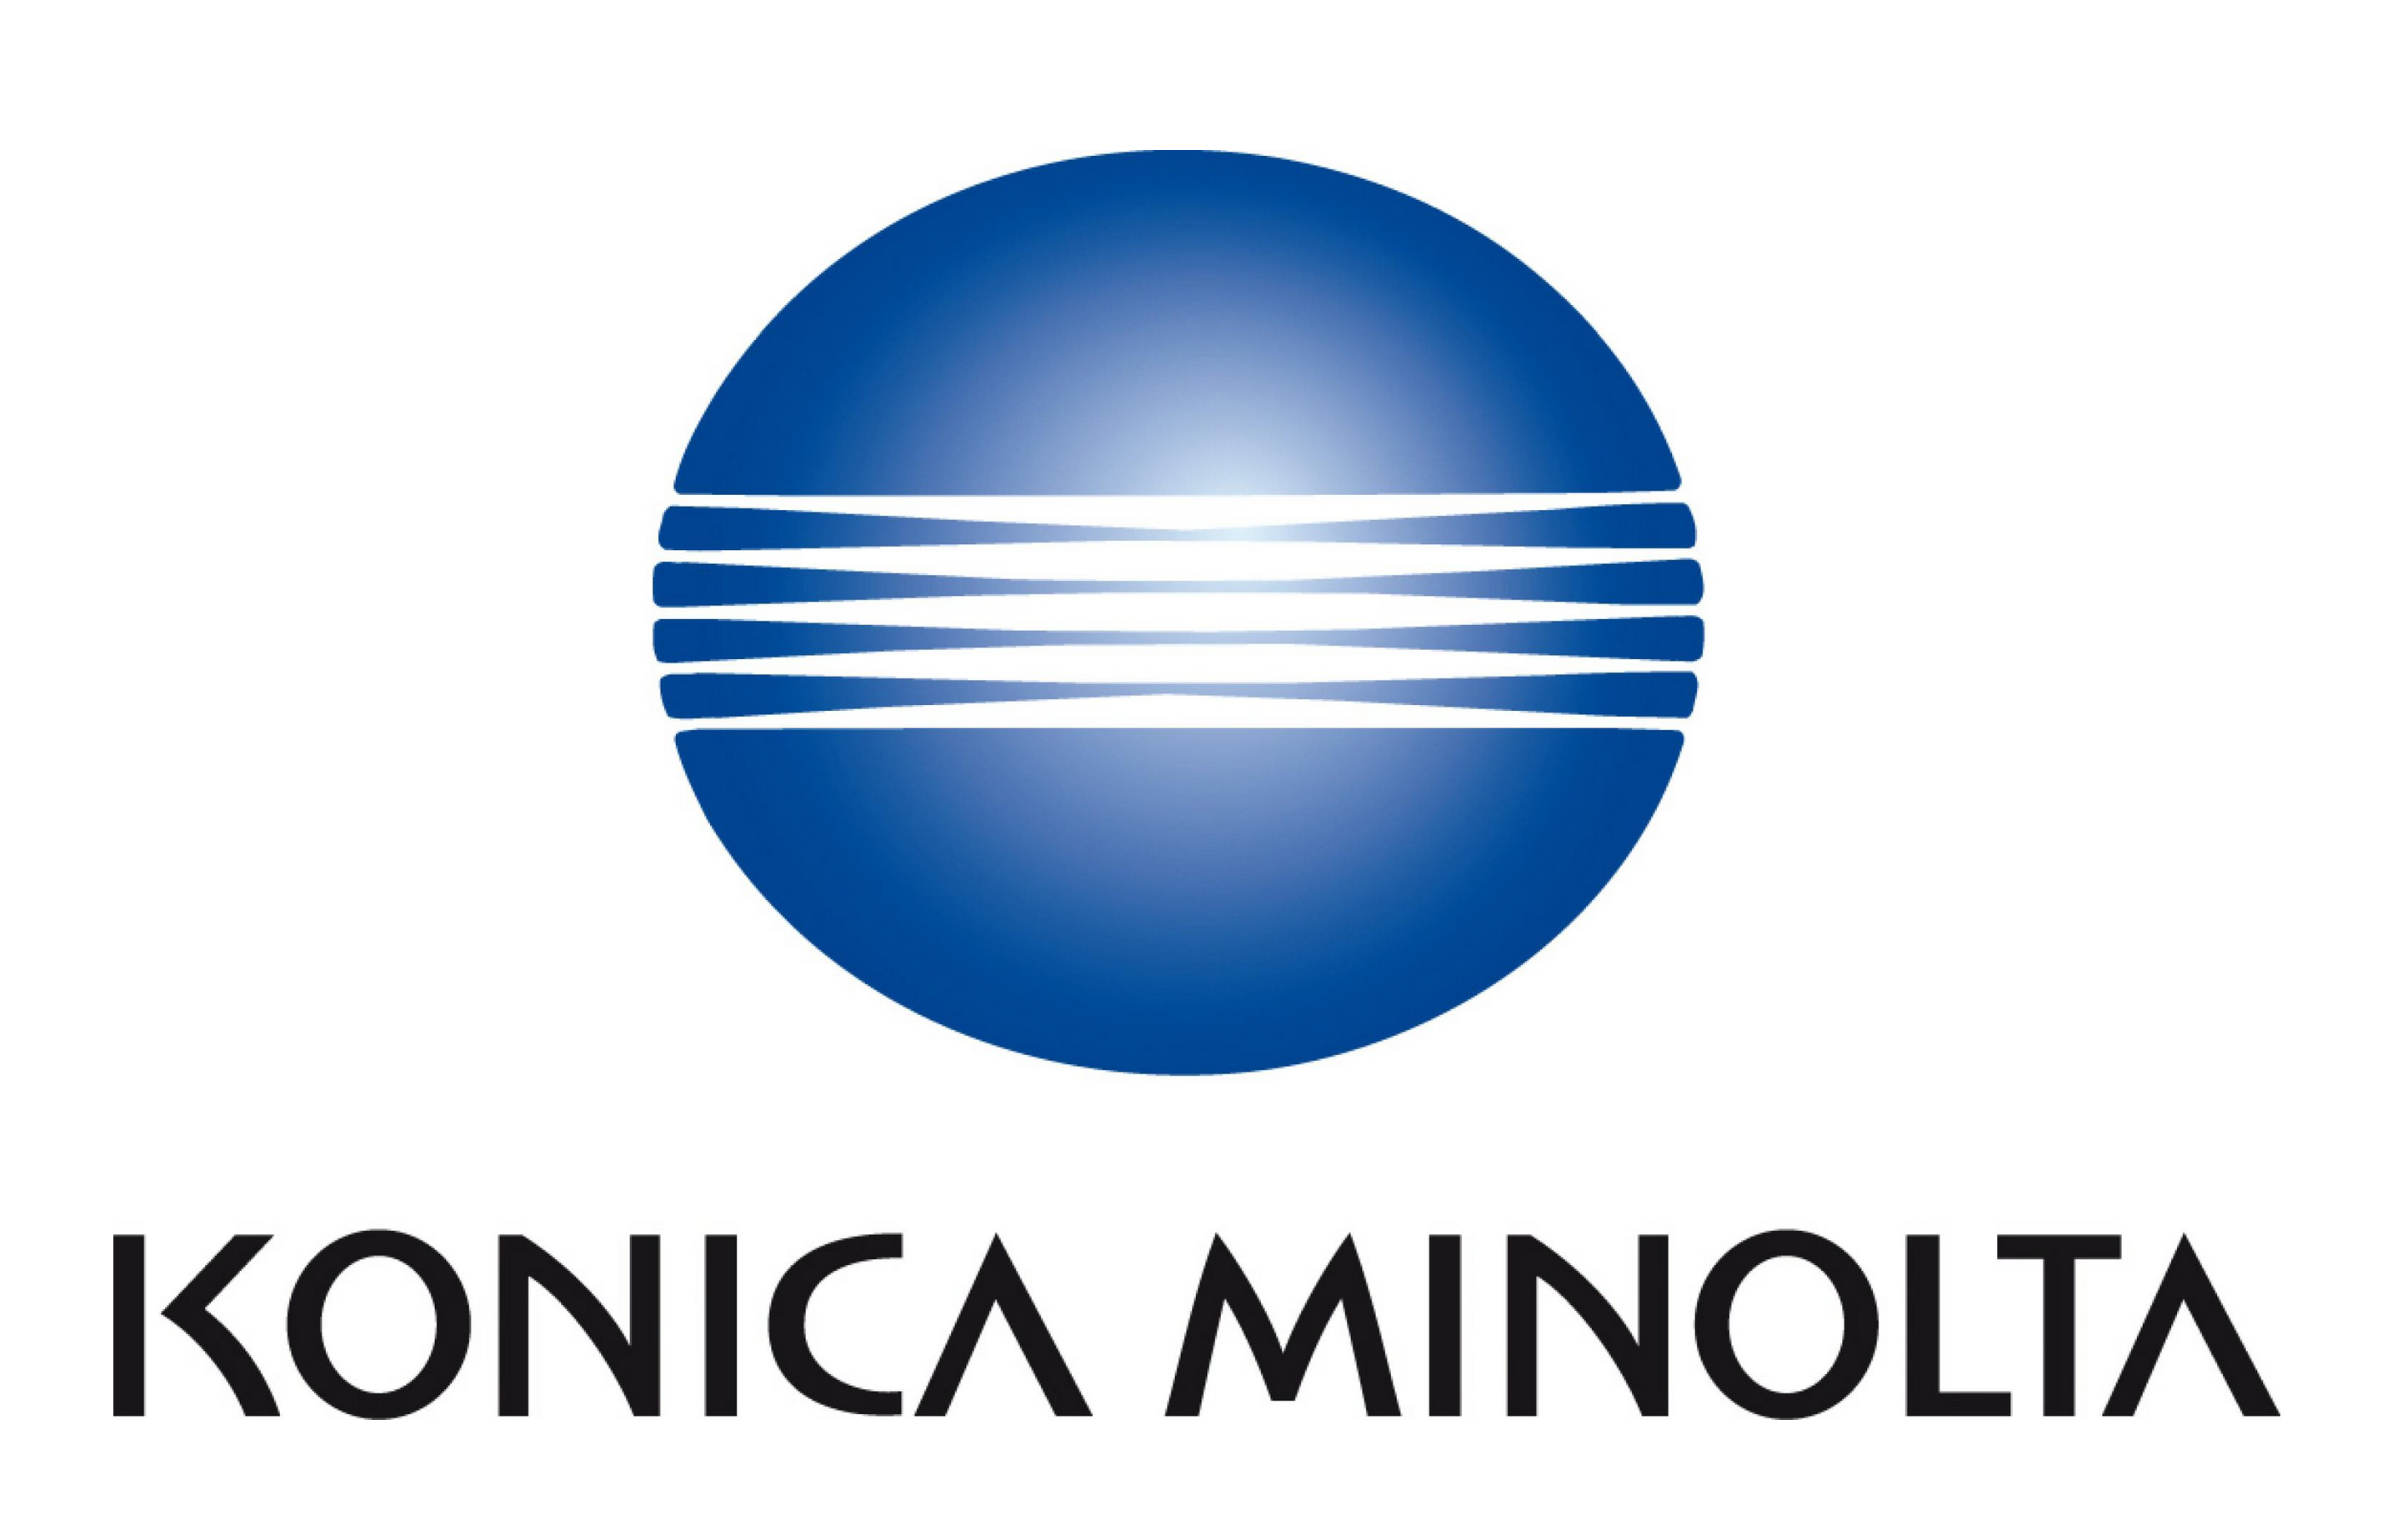 Konica Minolta.Inc